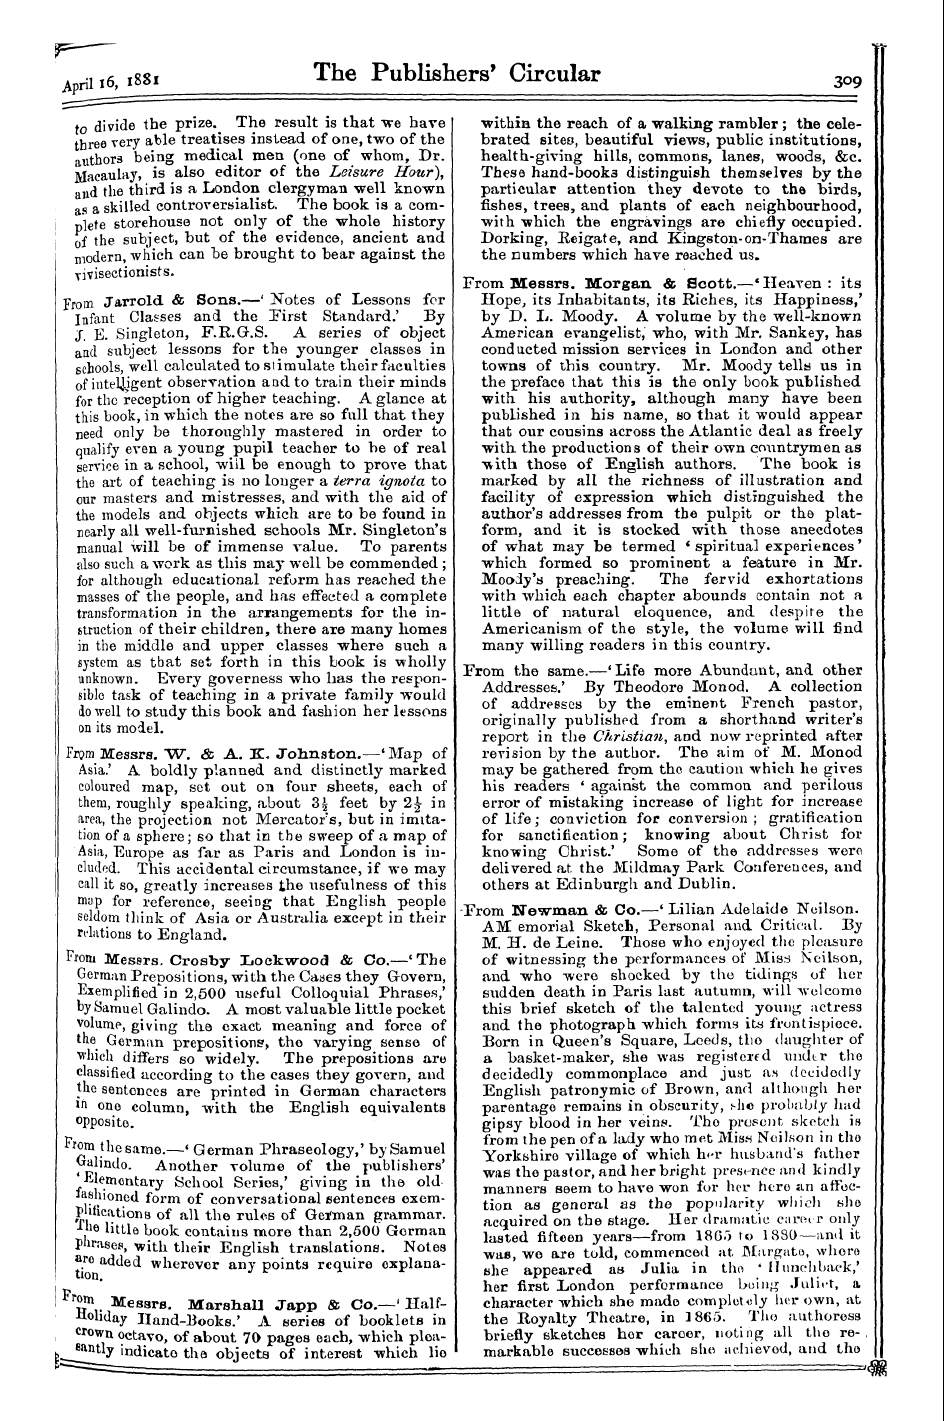 Publishers’ Circular (1880-1890): jS F Y, 1st edition - Rii 161881 The Publishers' Circular 3o9 ...